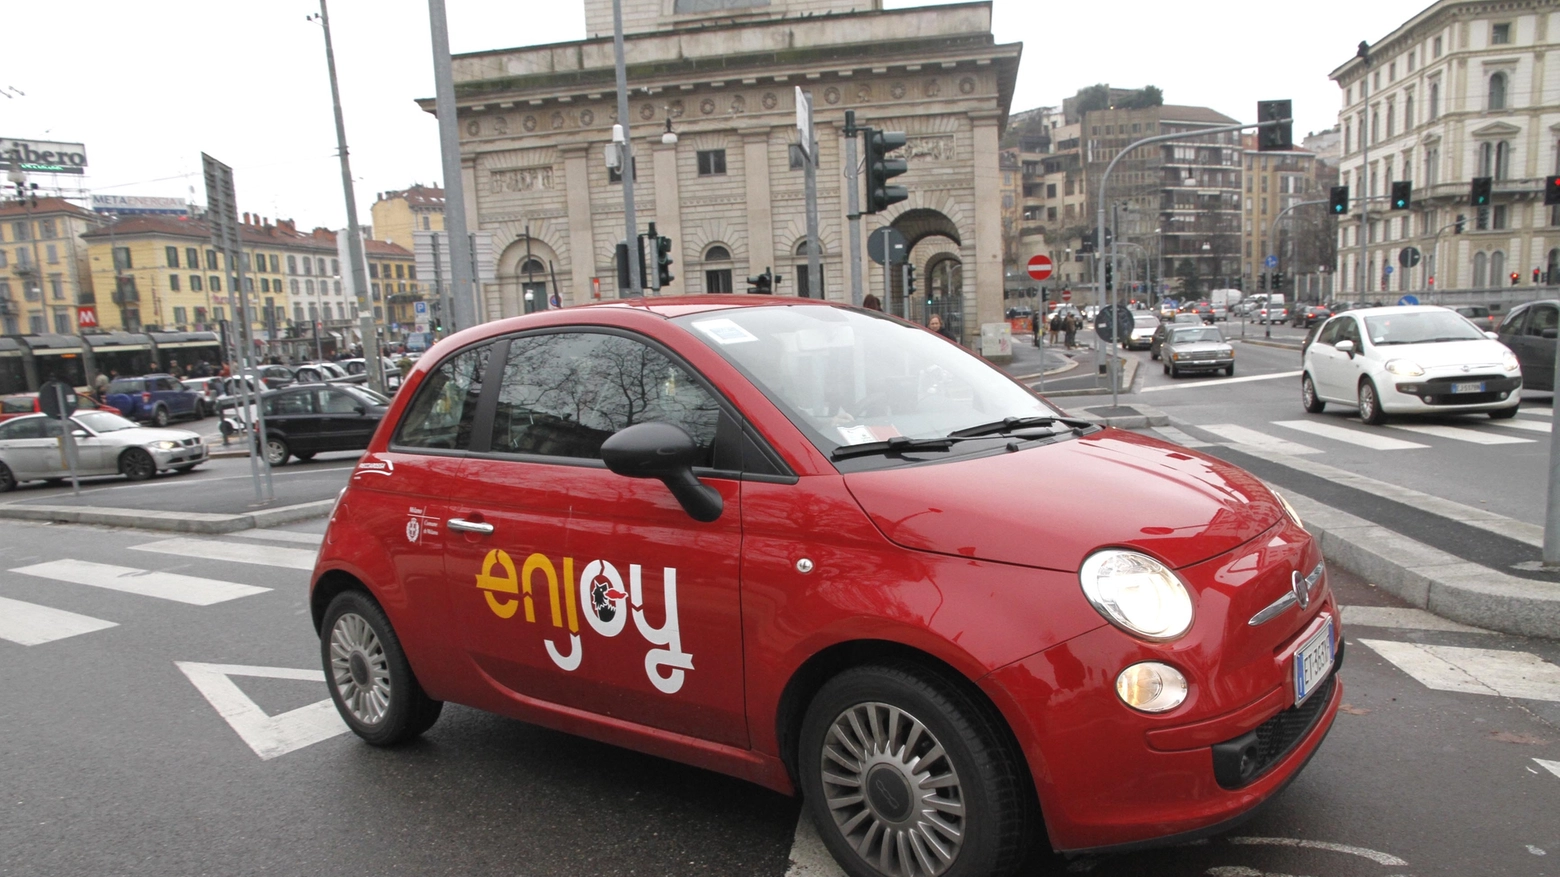 Car sharing Enjoy a Milano in una foto d'archivio (Newpress)